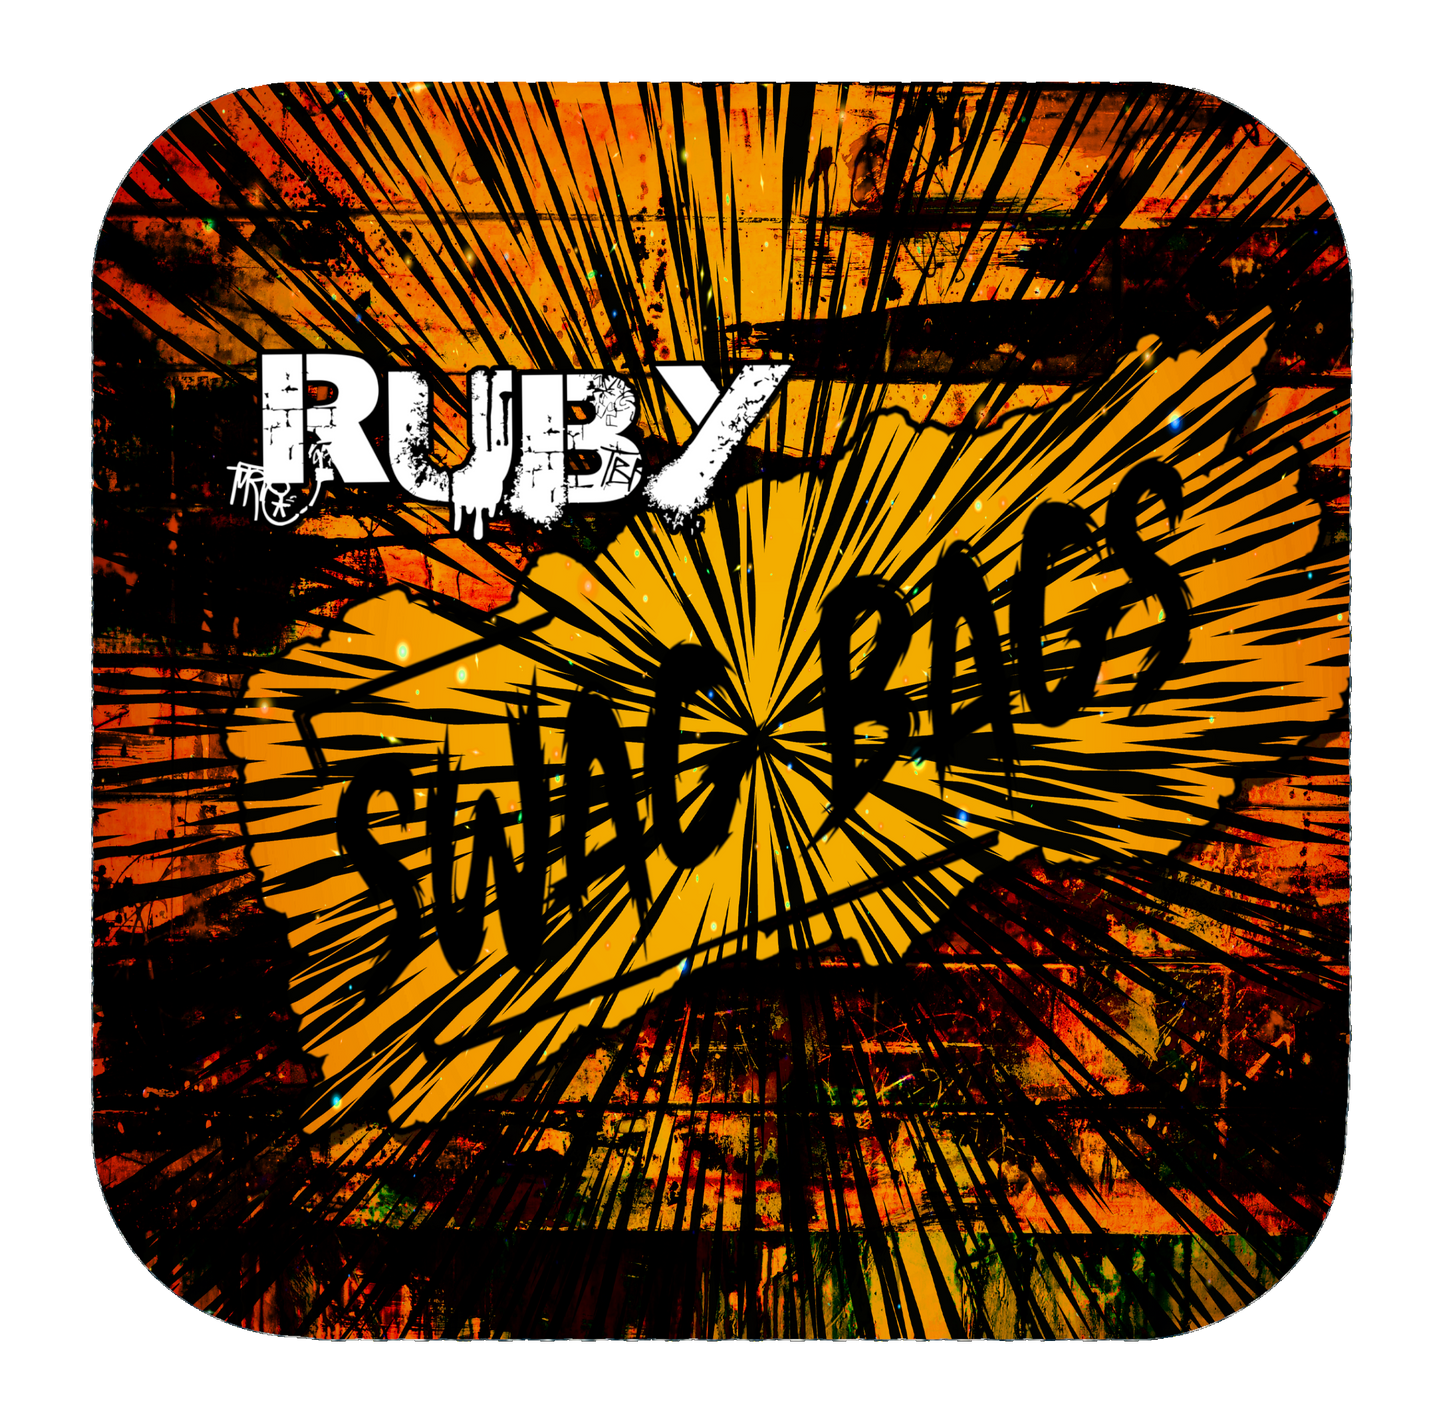 RUBY - 2024 "Ruben Spade"